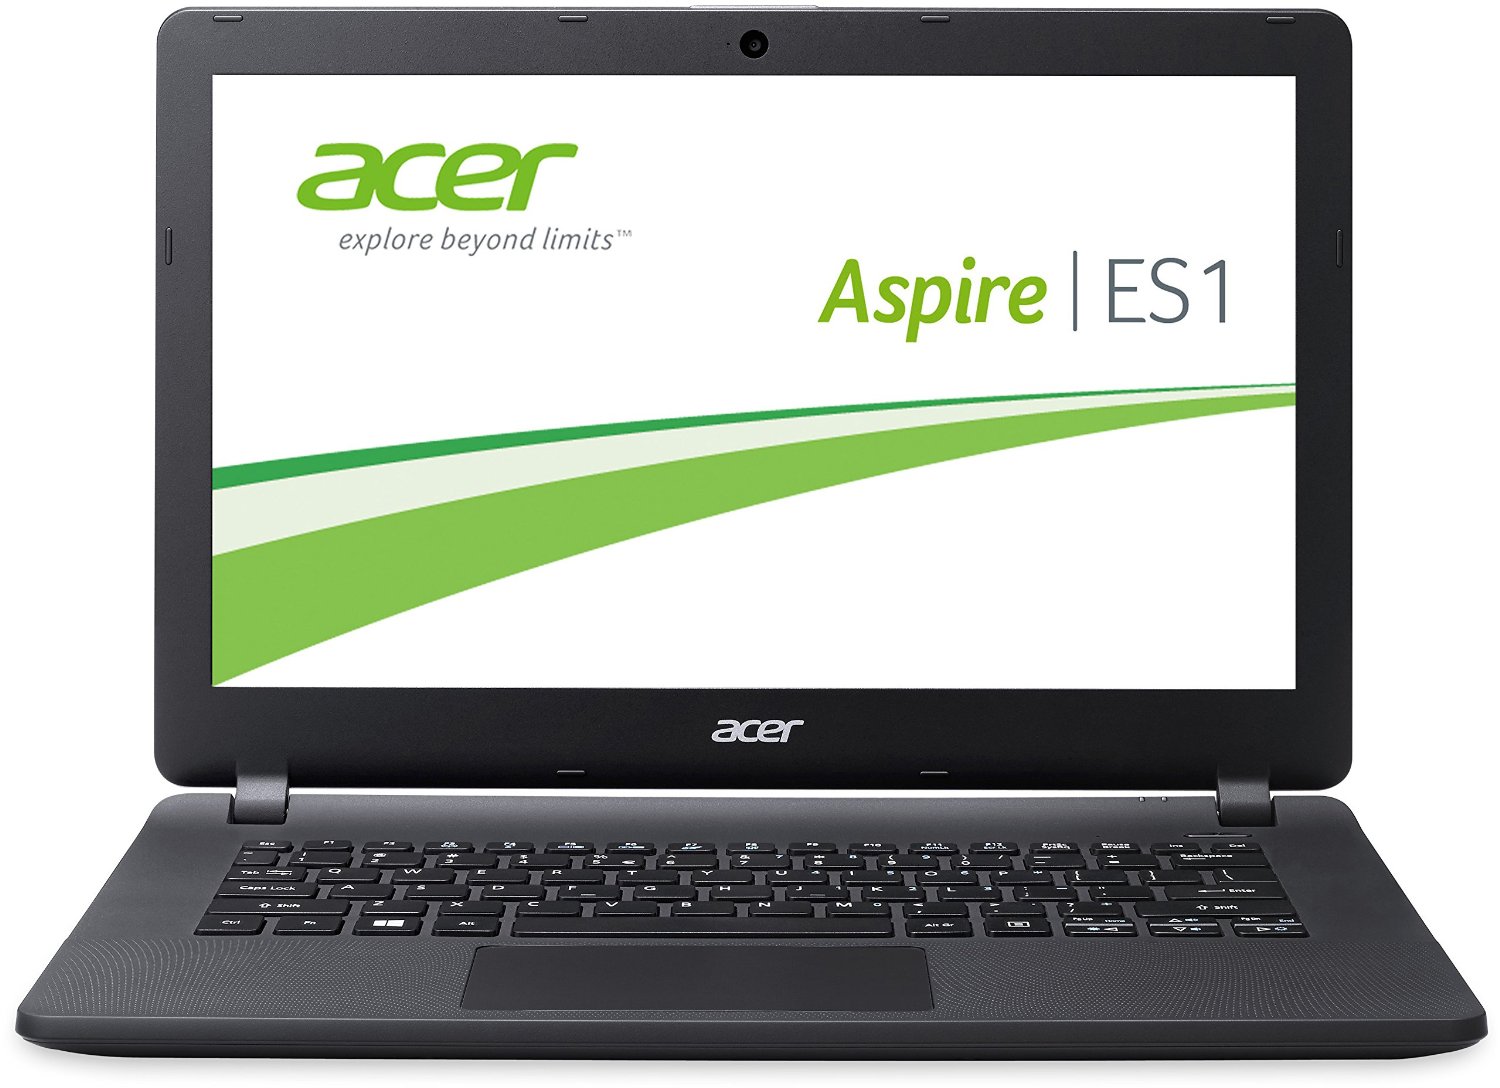 Laptop Acer Aspire ES1, Intel Celeron N3350M 1.10-2.40GHz, 4GB DDR3, 120GB SSD, 15.6 Inch, Webcam, Tastatura Numerica, Baterie consumata